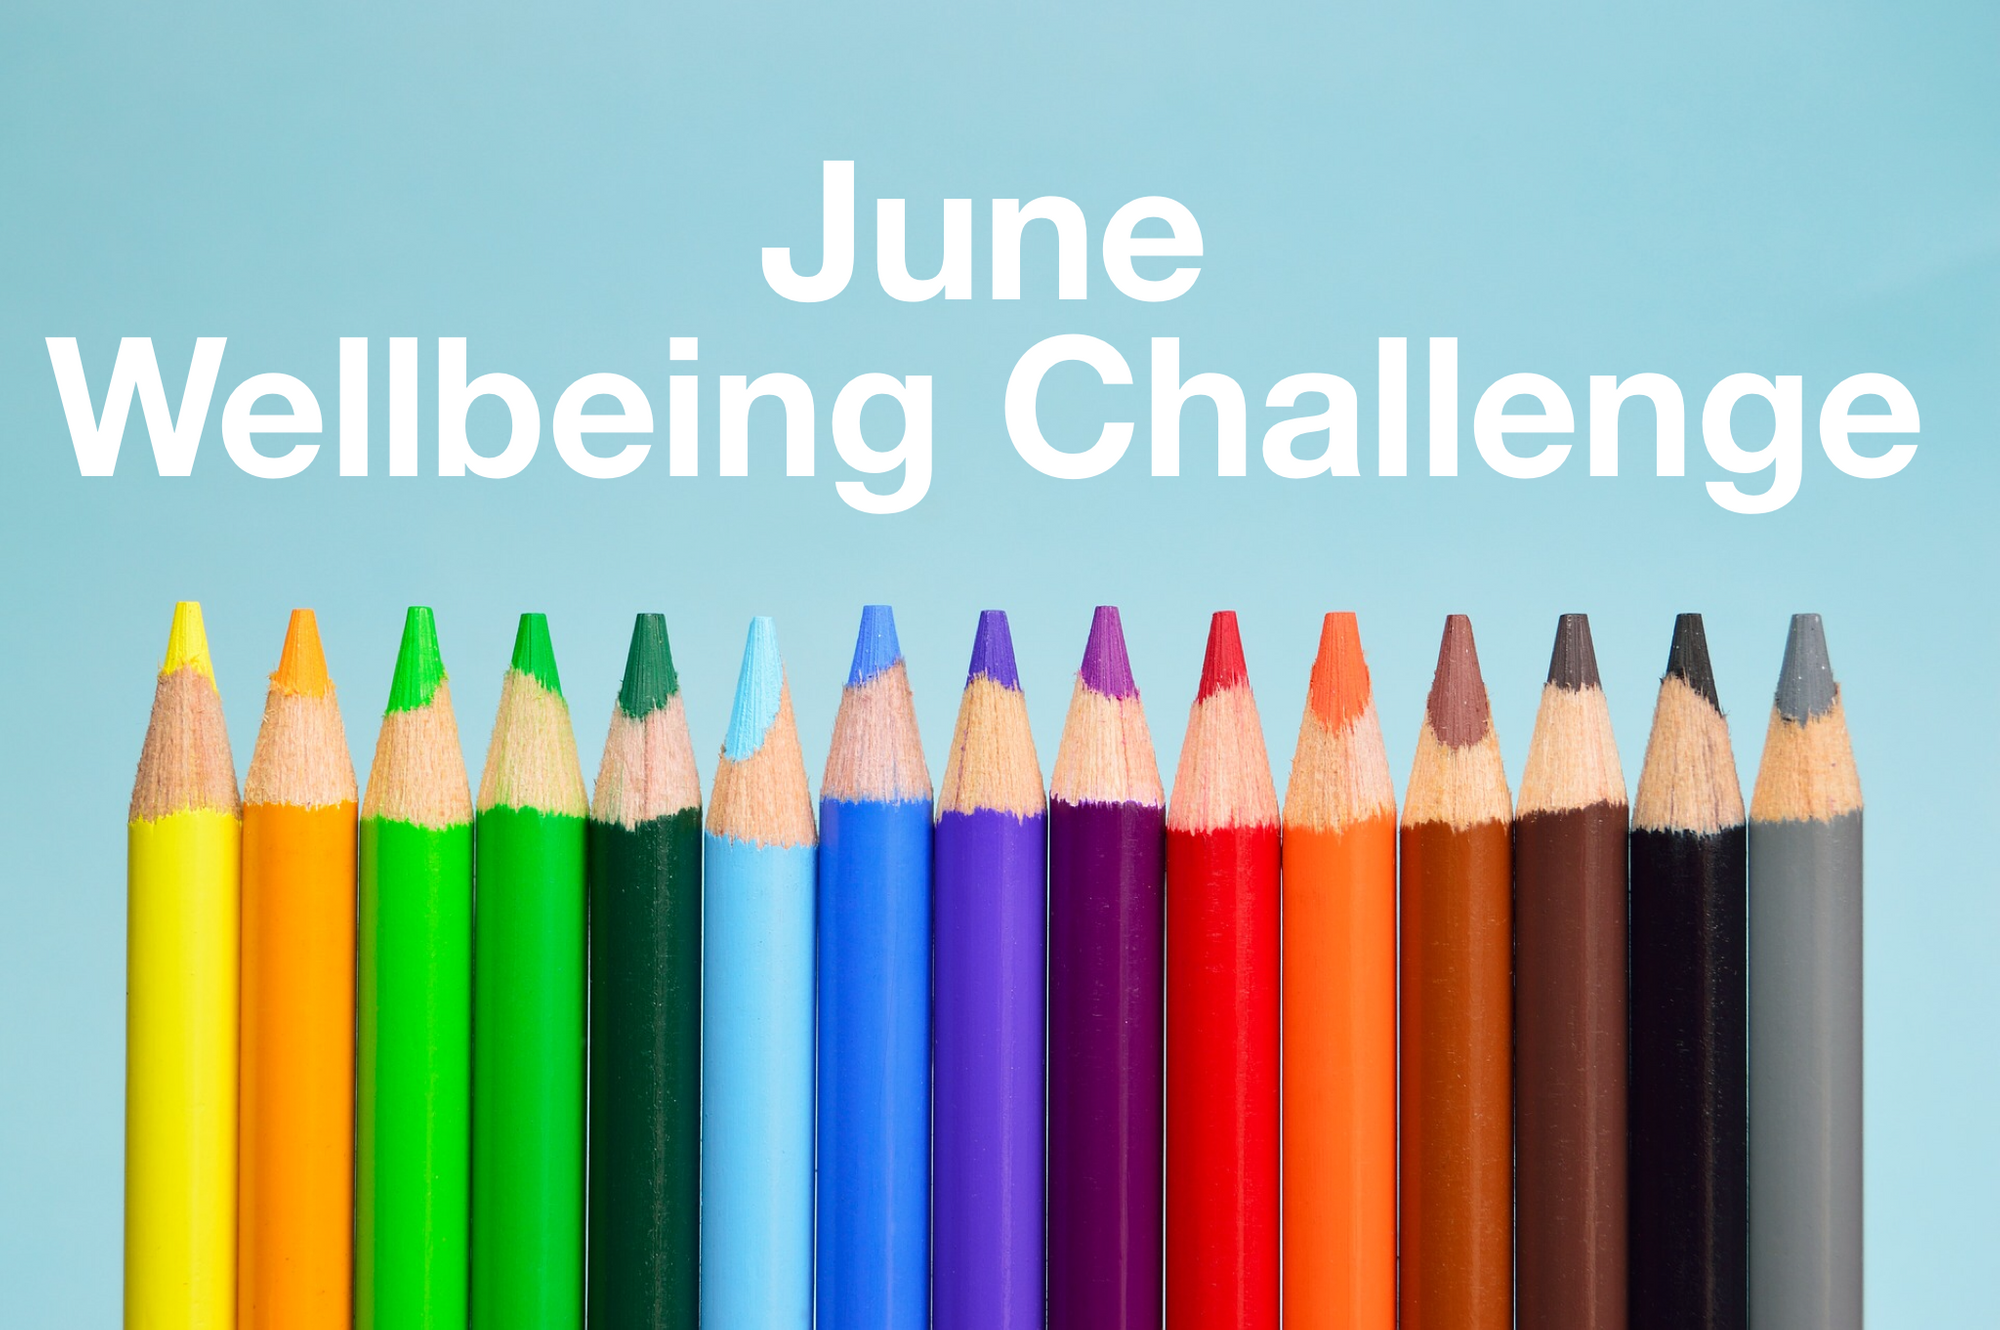 June Wellbeing Challenge 2018